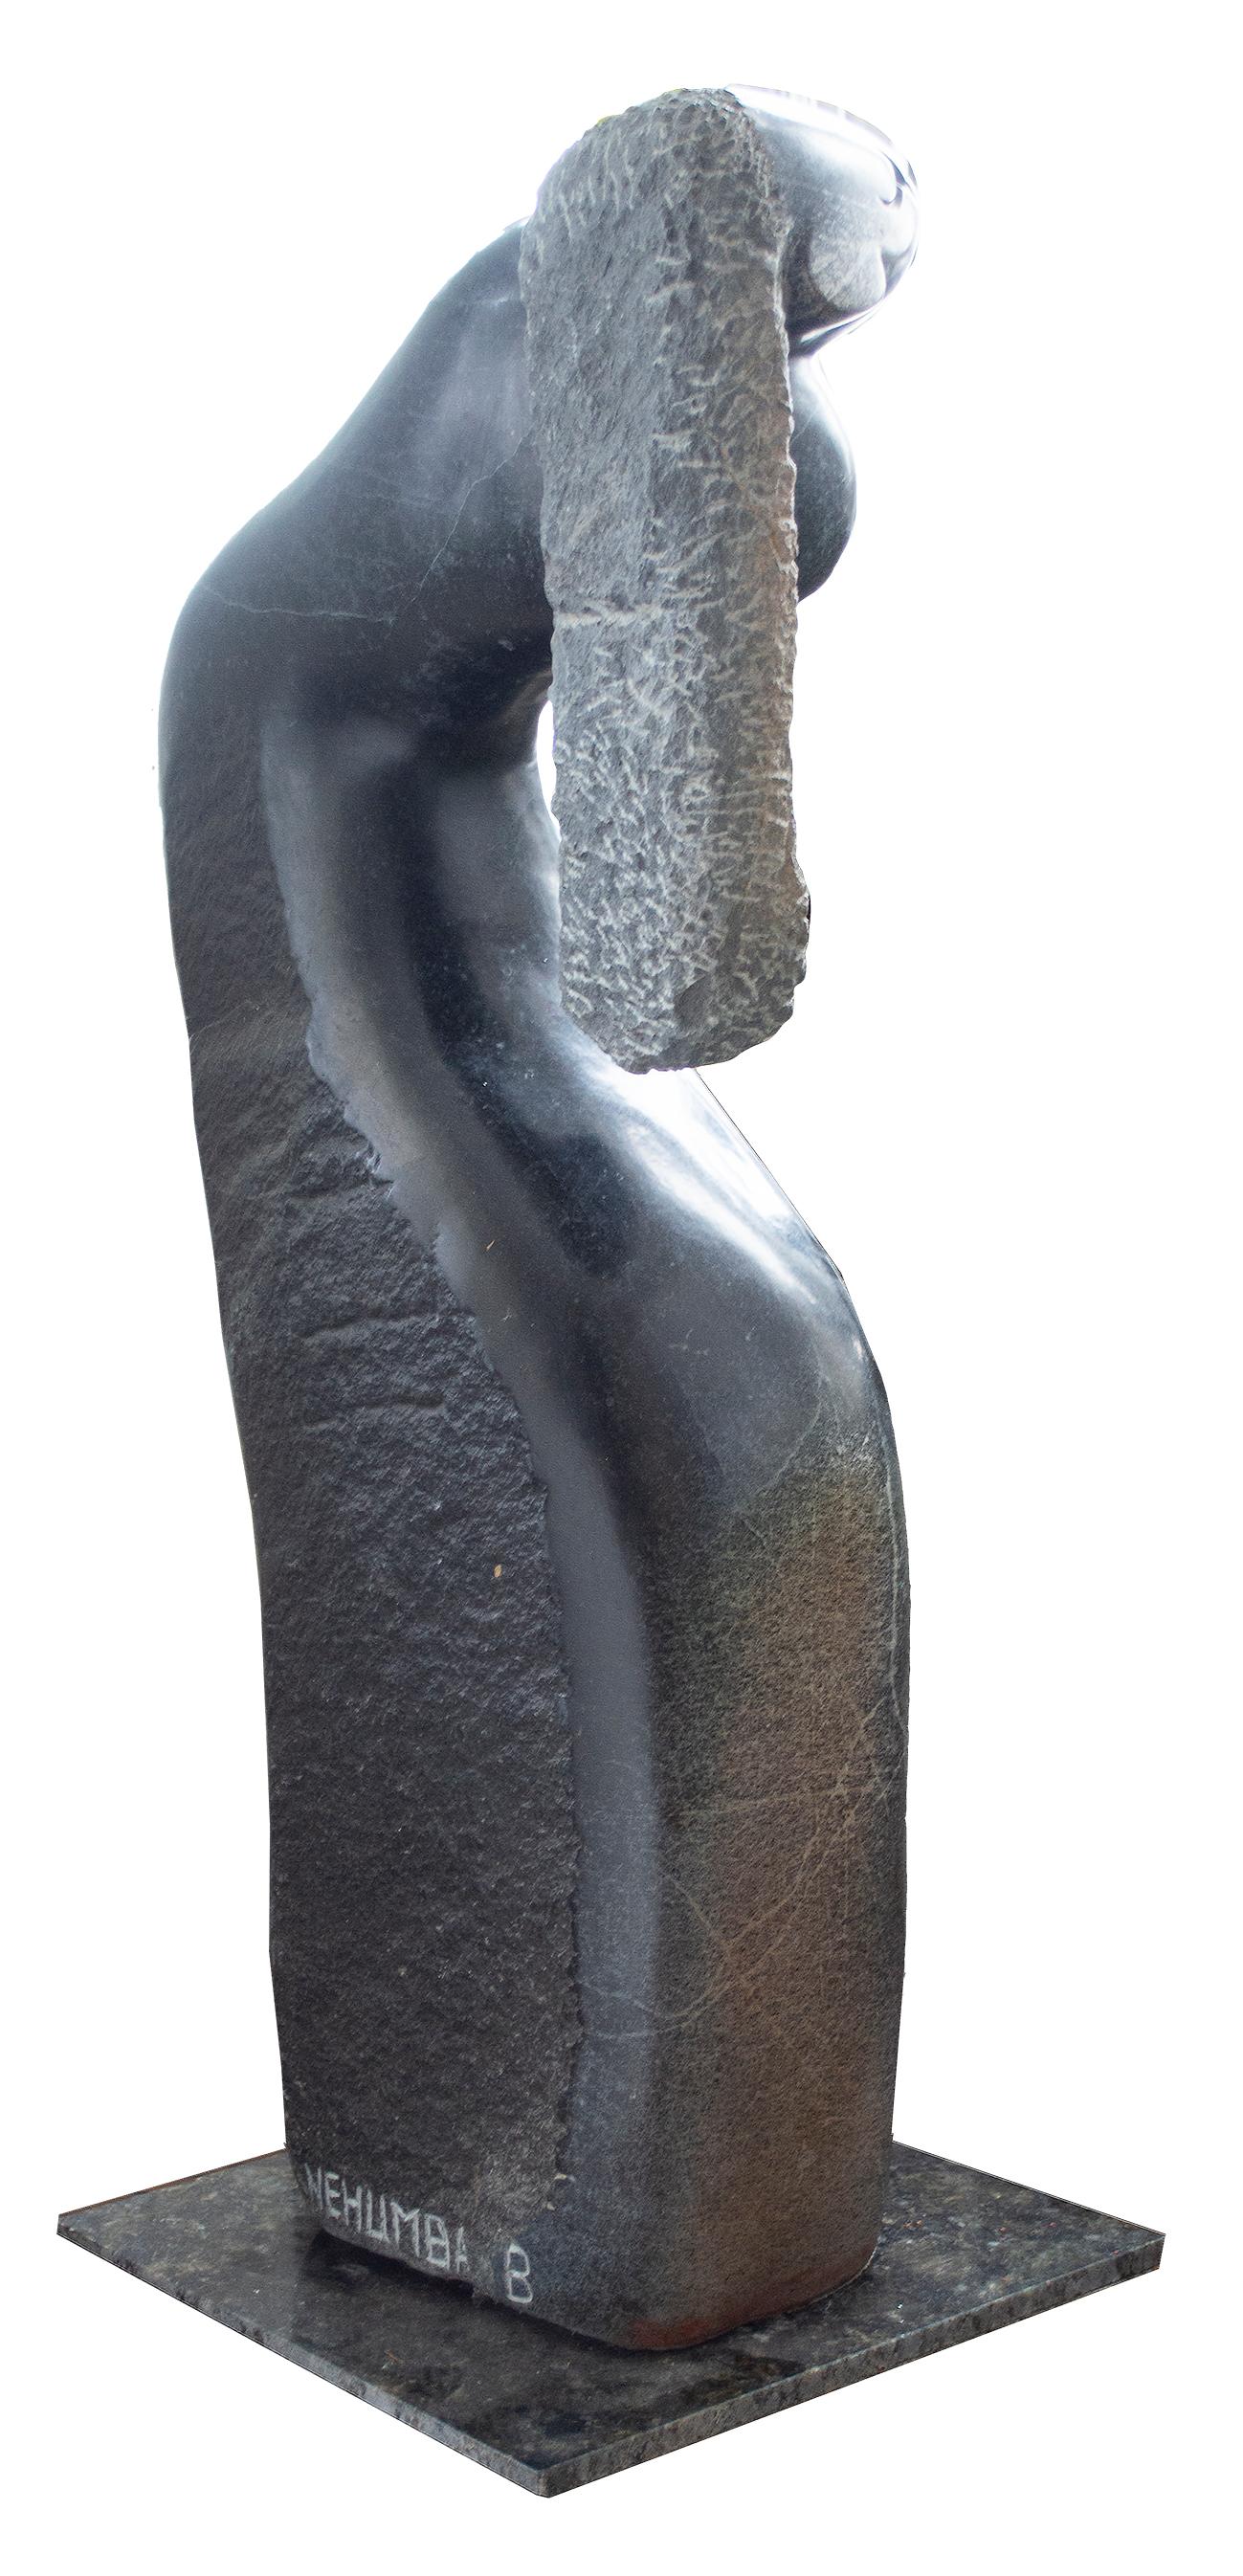 brian nelson sculptor